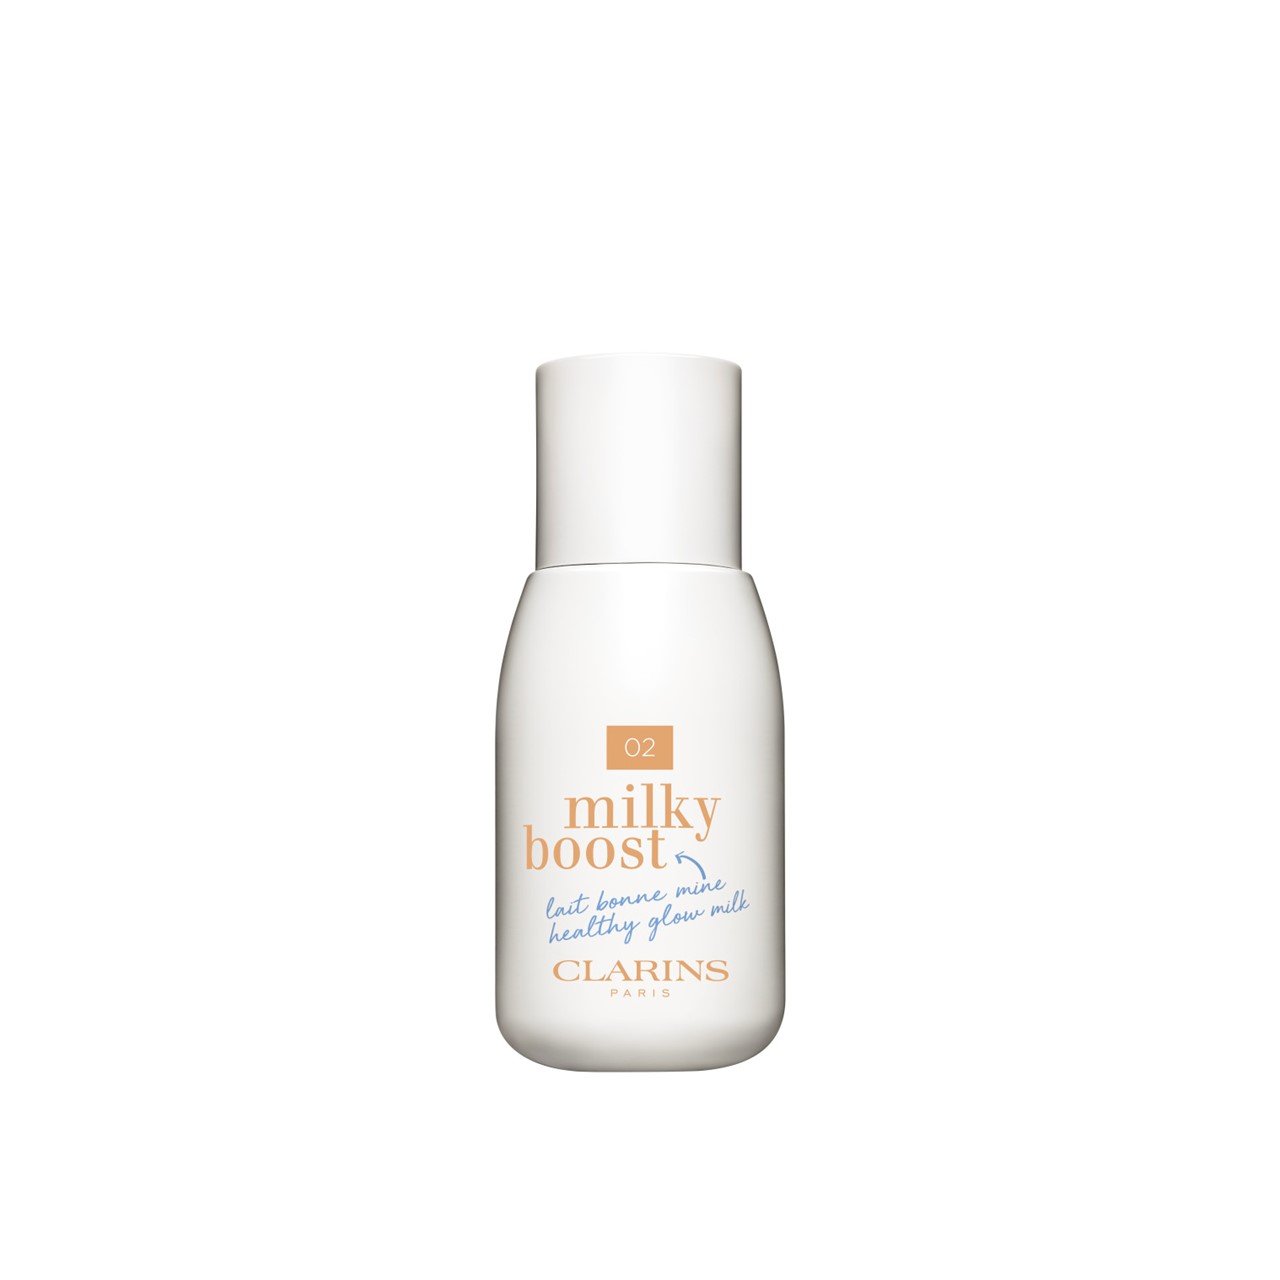 Clarins Milky Boost Skin-Perfecting Milk 02 Milky Nude 50ml